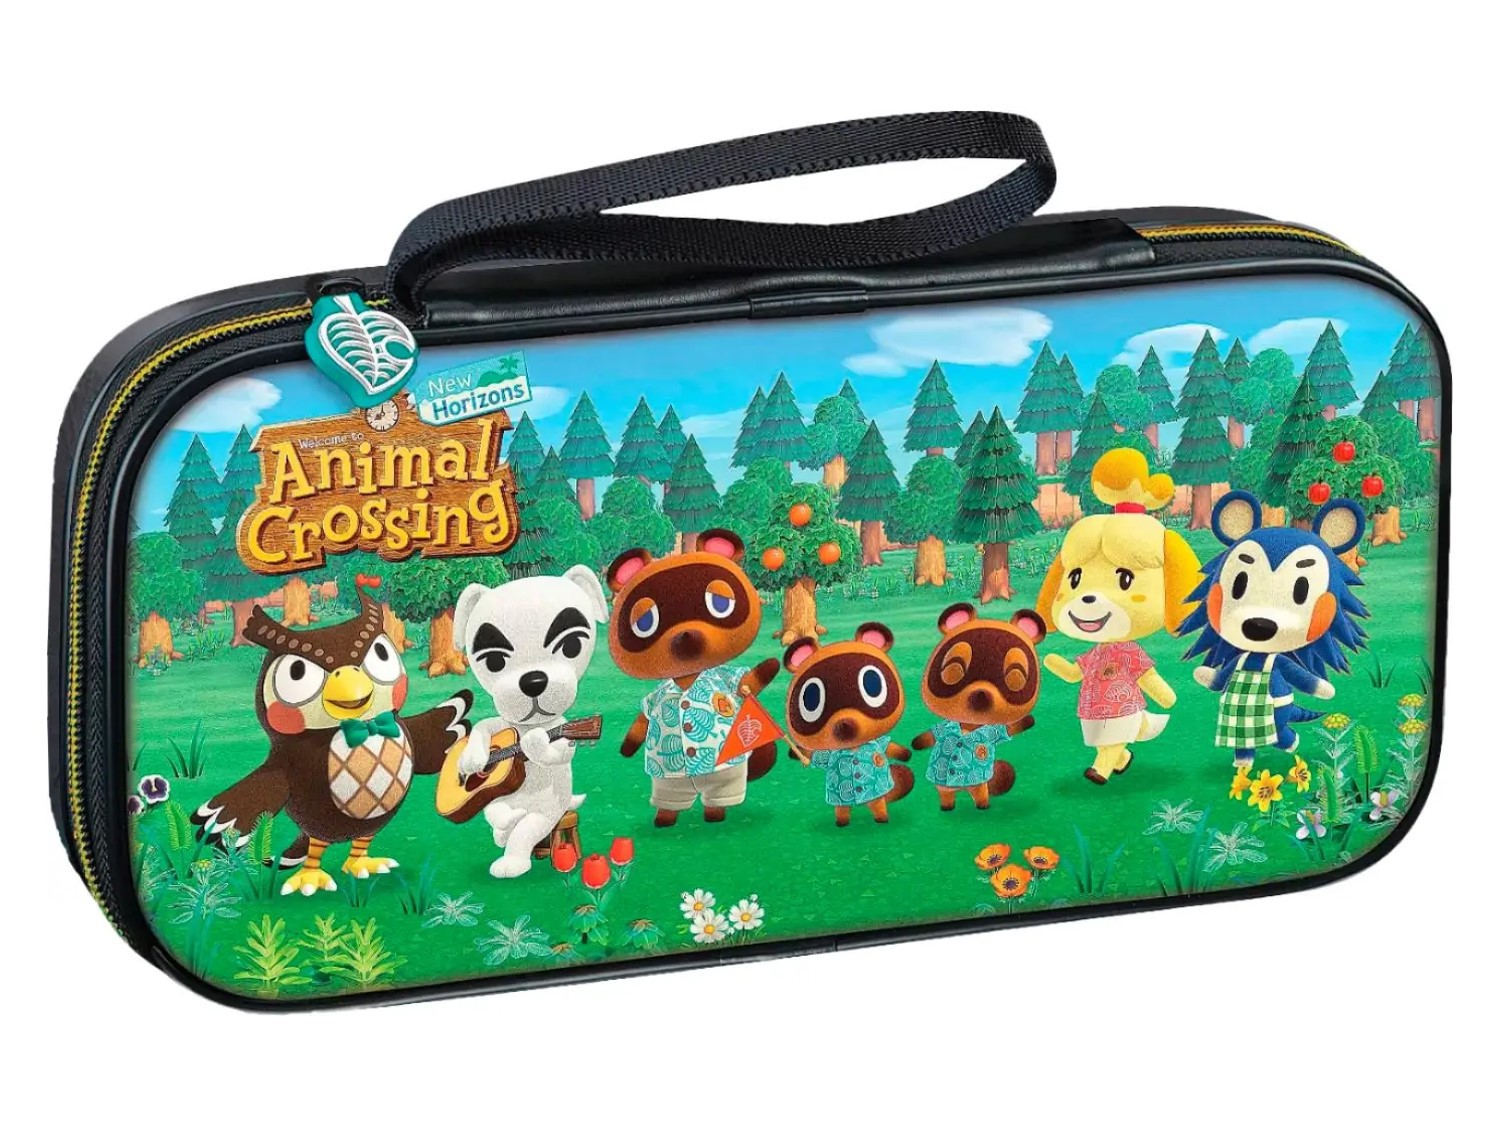 Nintendo Switch Animal Crossing New Horizons Travel Case - Nintendo Switch Hardware